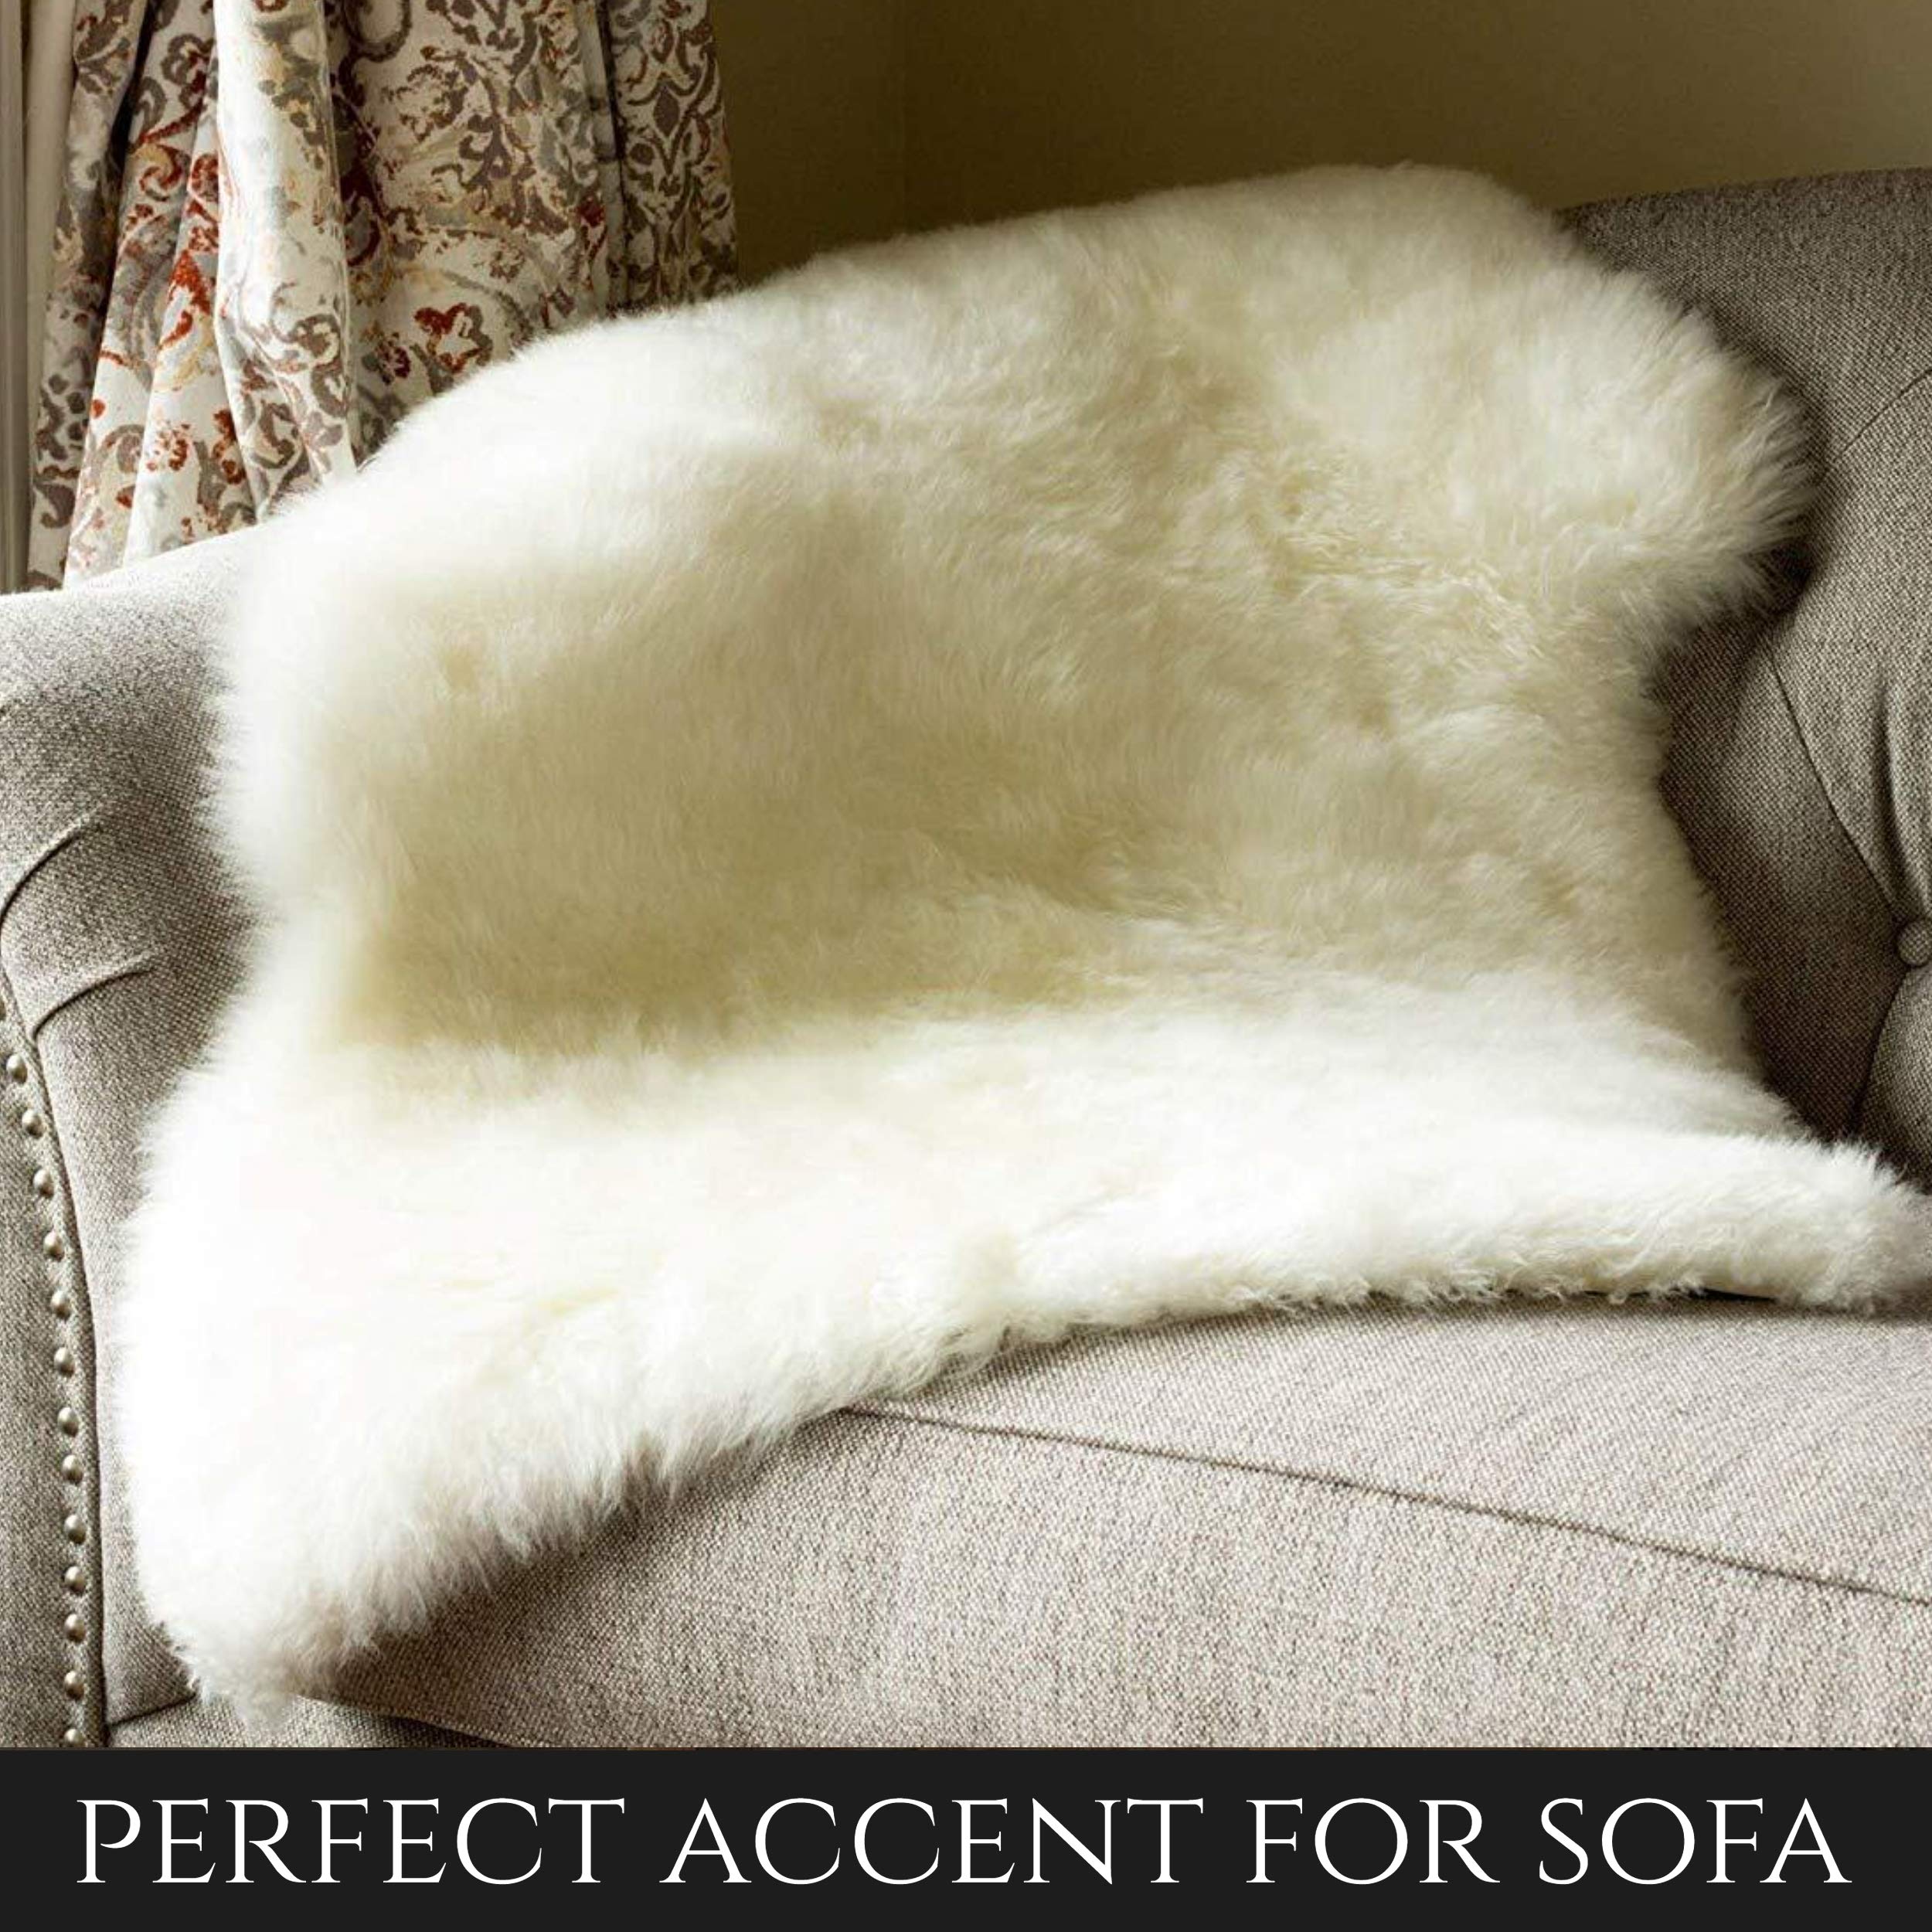 Super Area Rugs Genuine New Zealand Fluffy Sheepskin Rug for Bedroom Living Room, Natural, Large 2' x 3' Single Pelt